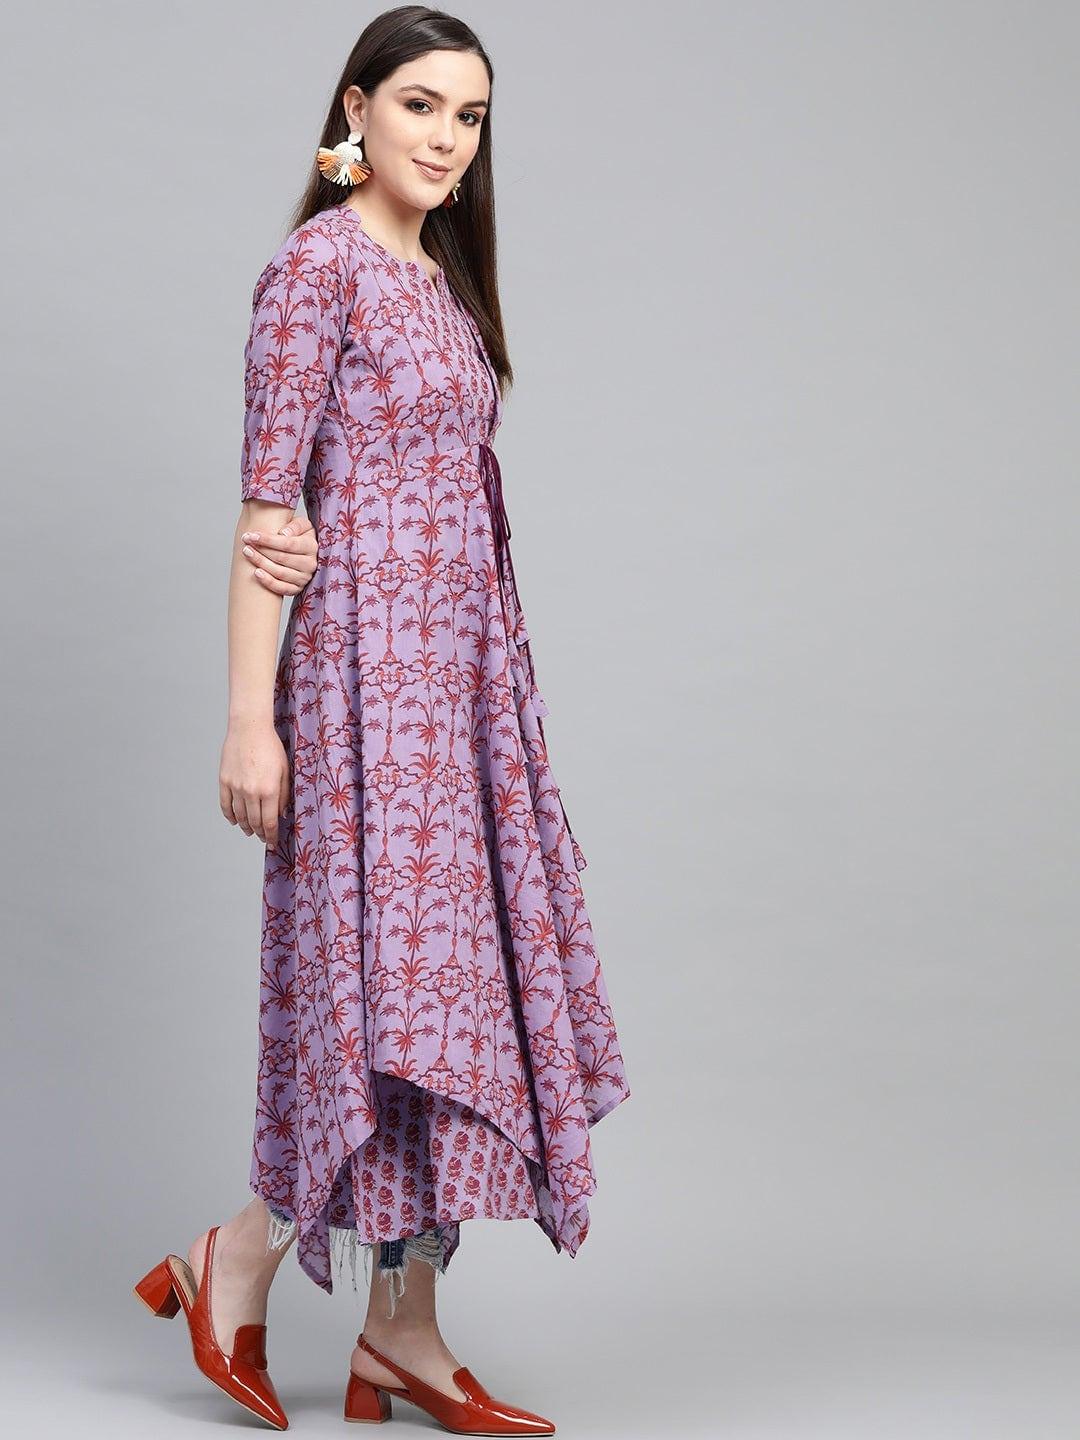 Purple Printed Cotton Dress - Libas